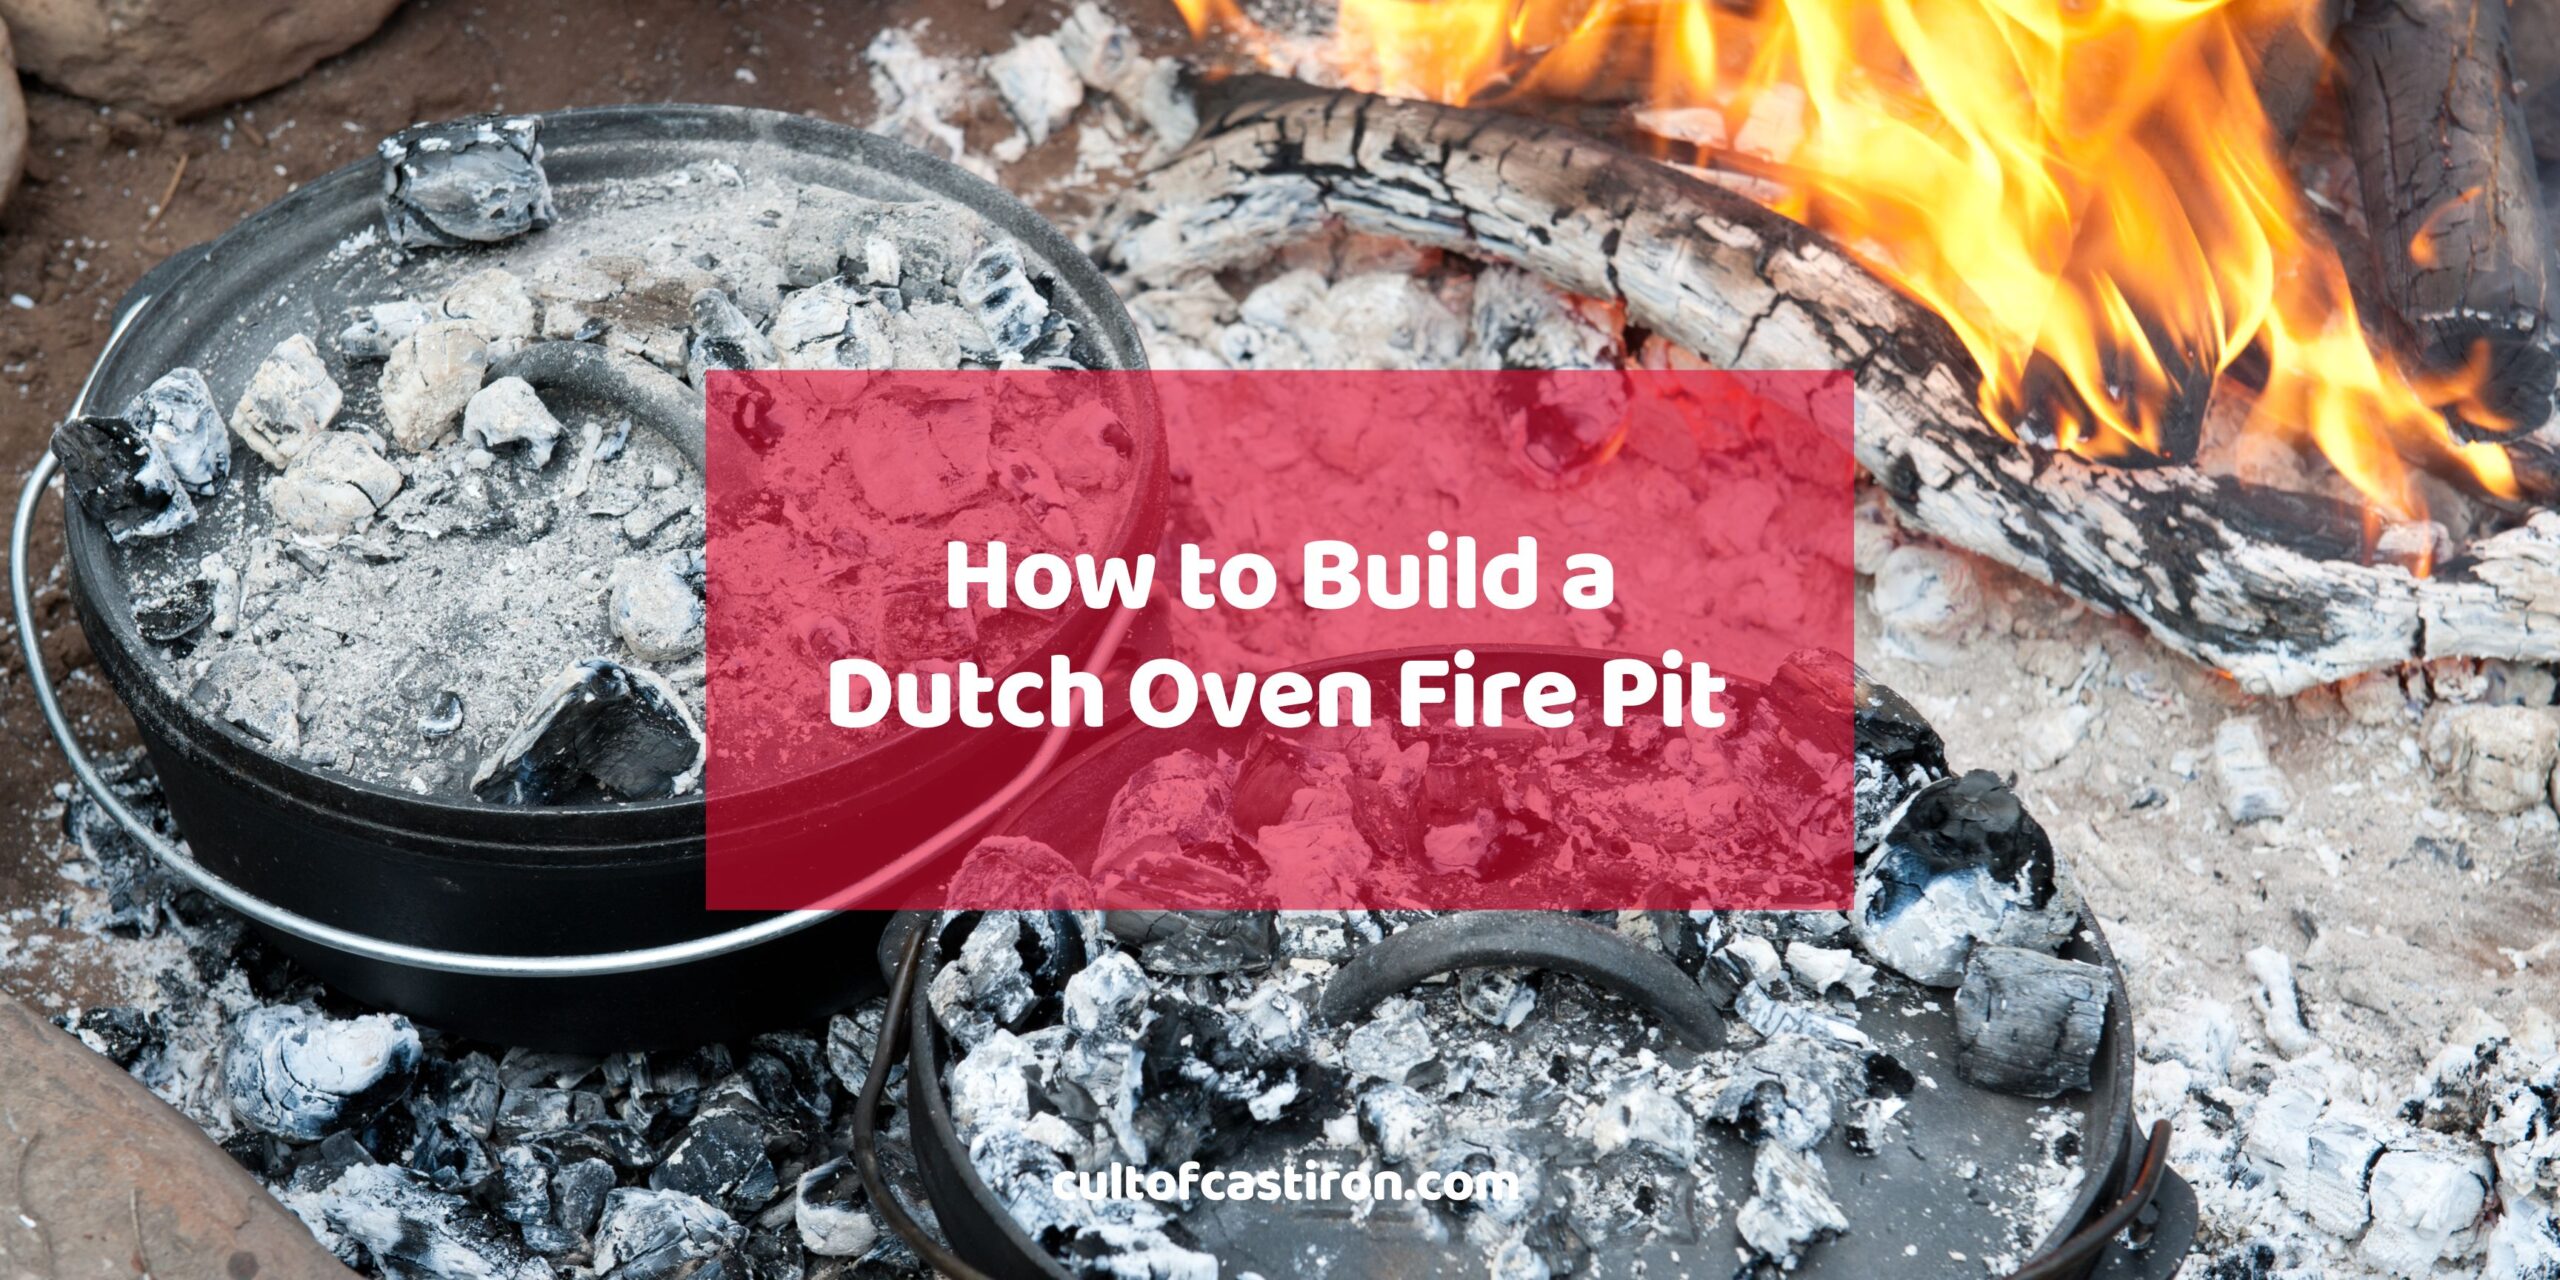 CAMPING TRIVET, Fire pit, campfire cooking, backyard, dutch oven